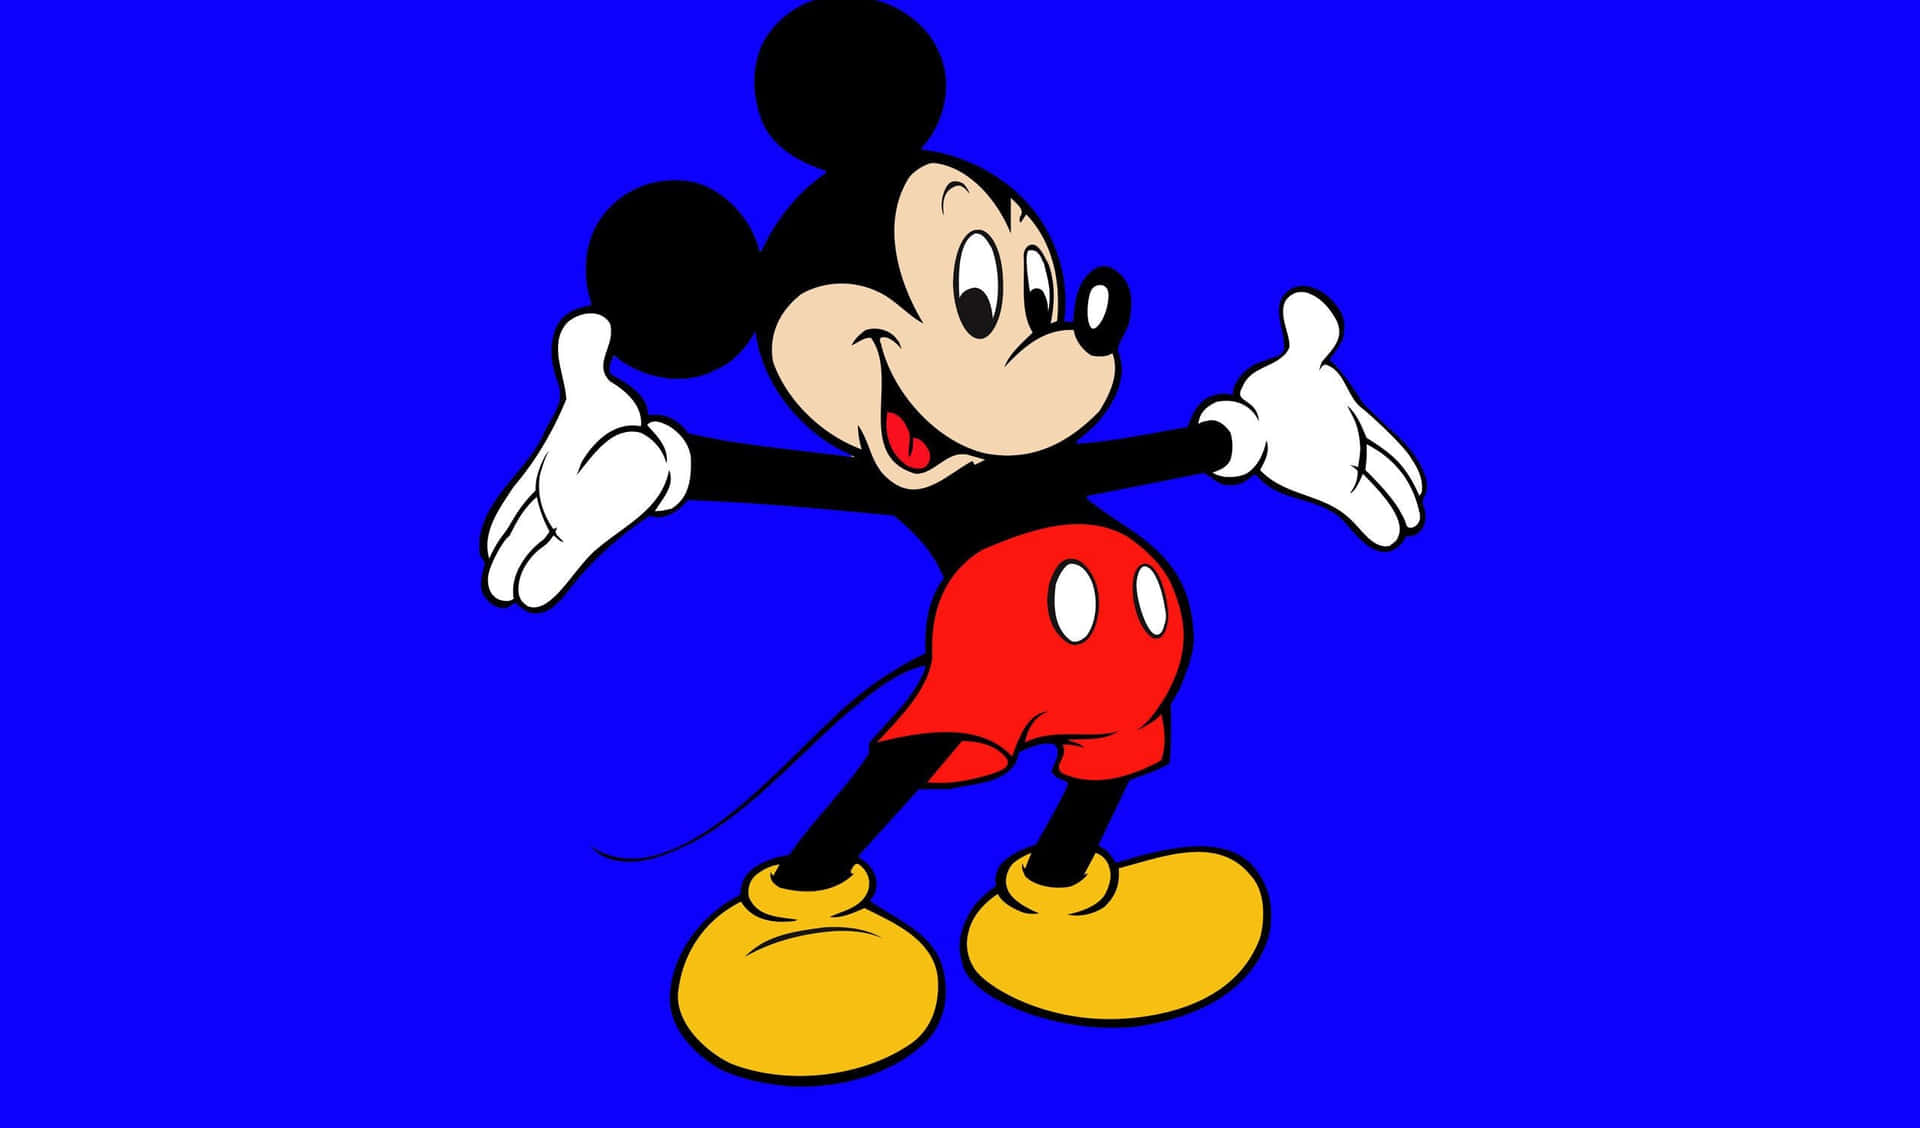 Mickey Mouse, The Iconic Walt Disney Cartoon Character